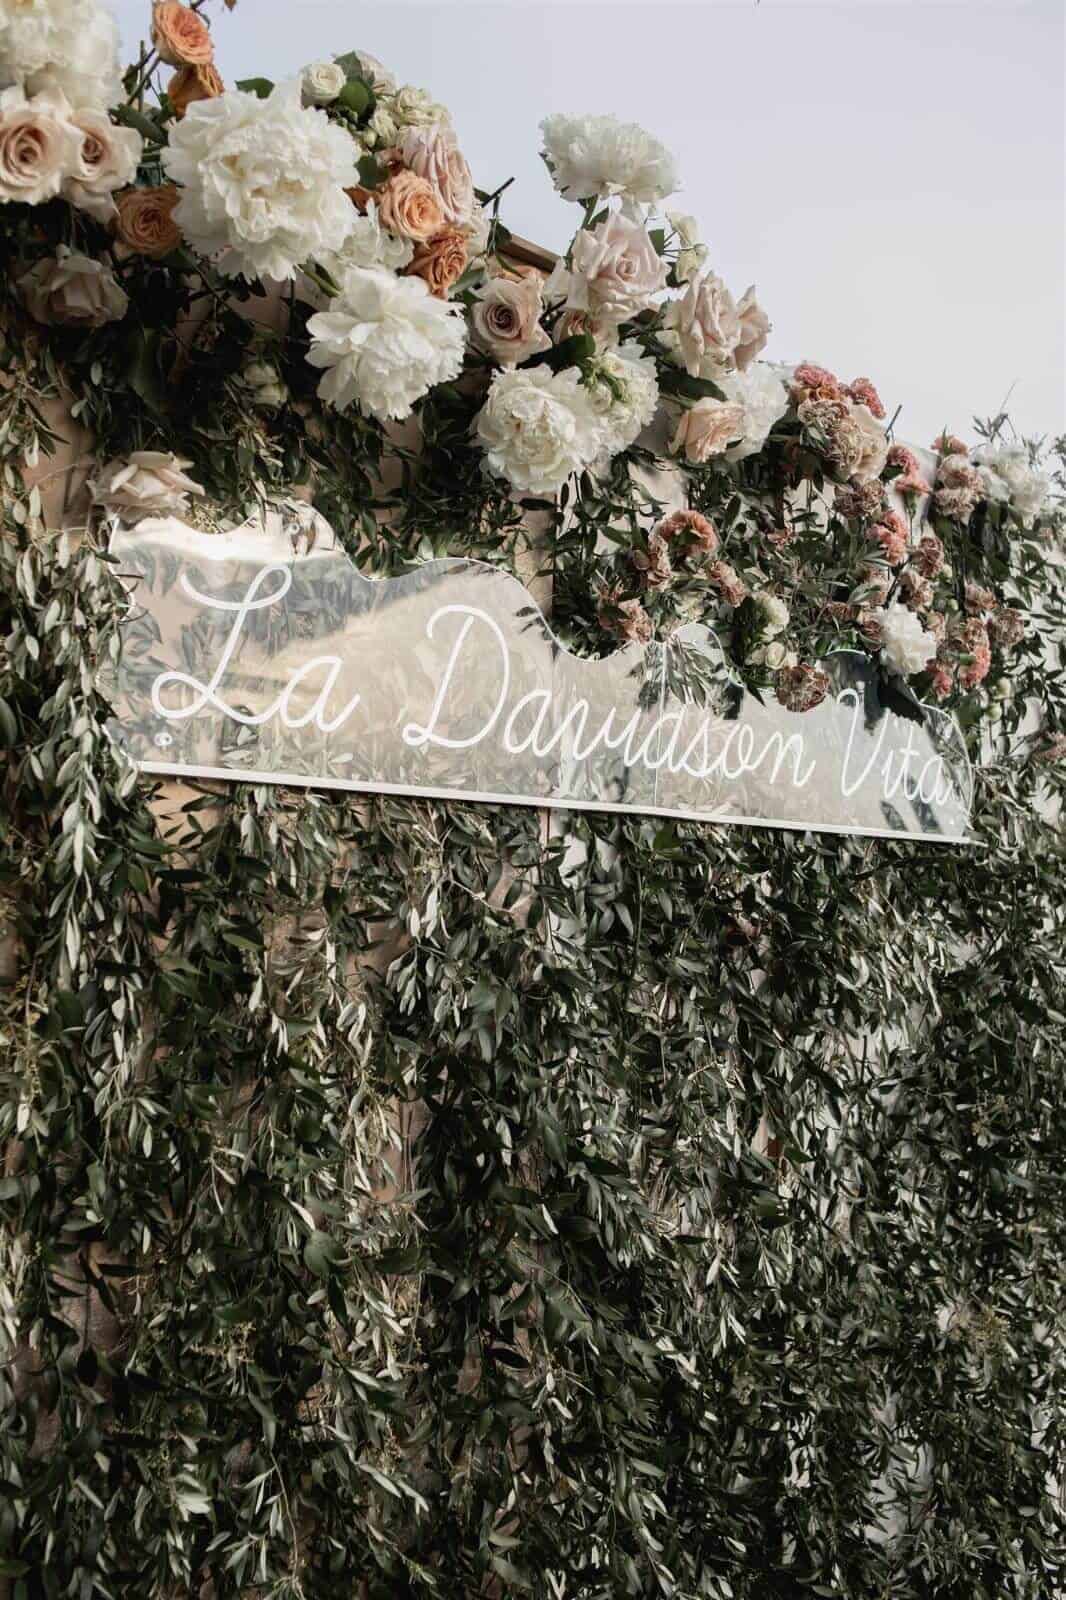 Millennial wedding logo put into flowers